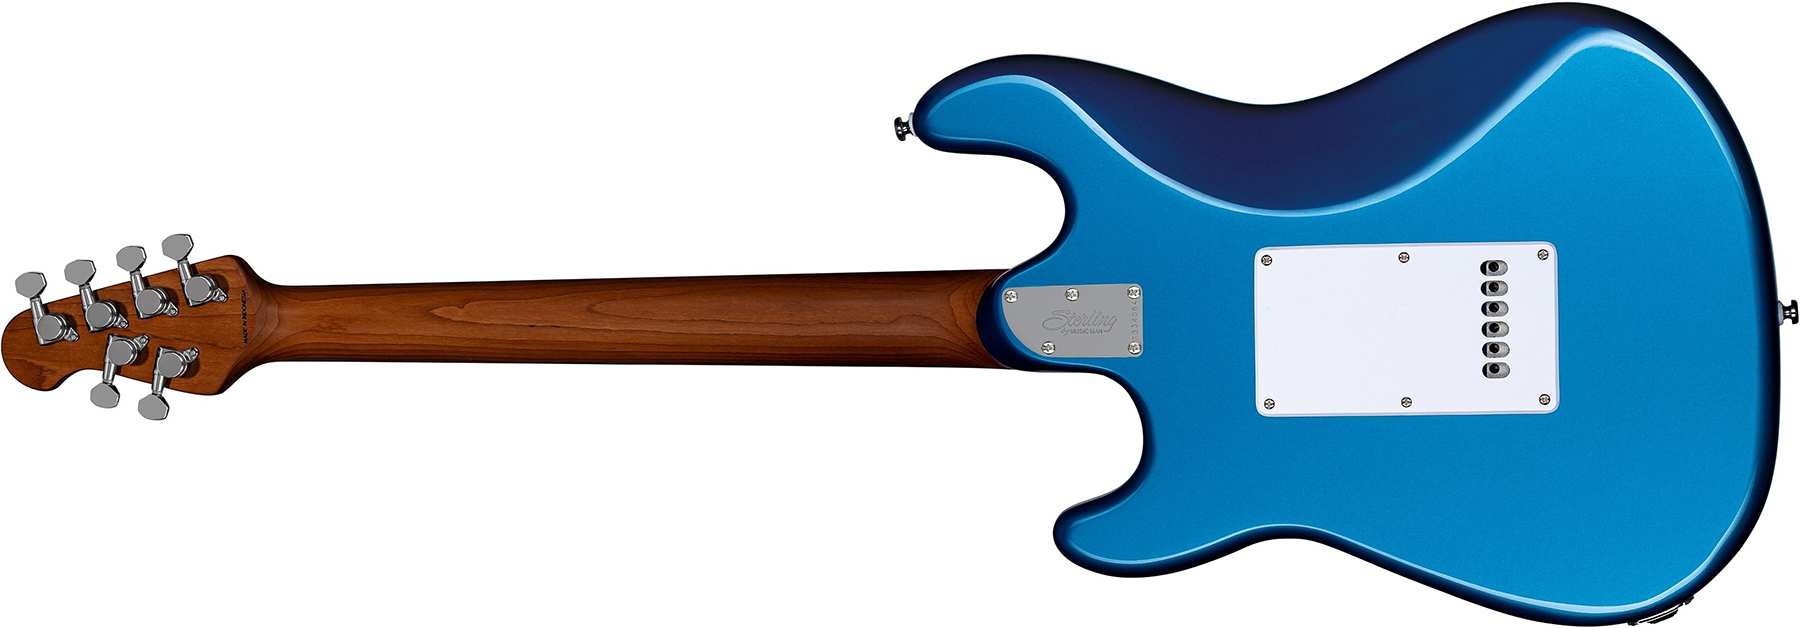 Sterling By Musicman Cutlass Ct50sss 3s Trem Rw - Toluca Lake Blue - Elektrische gitaar in Str-vorm - Variation 1